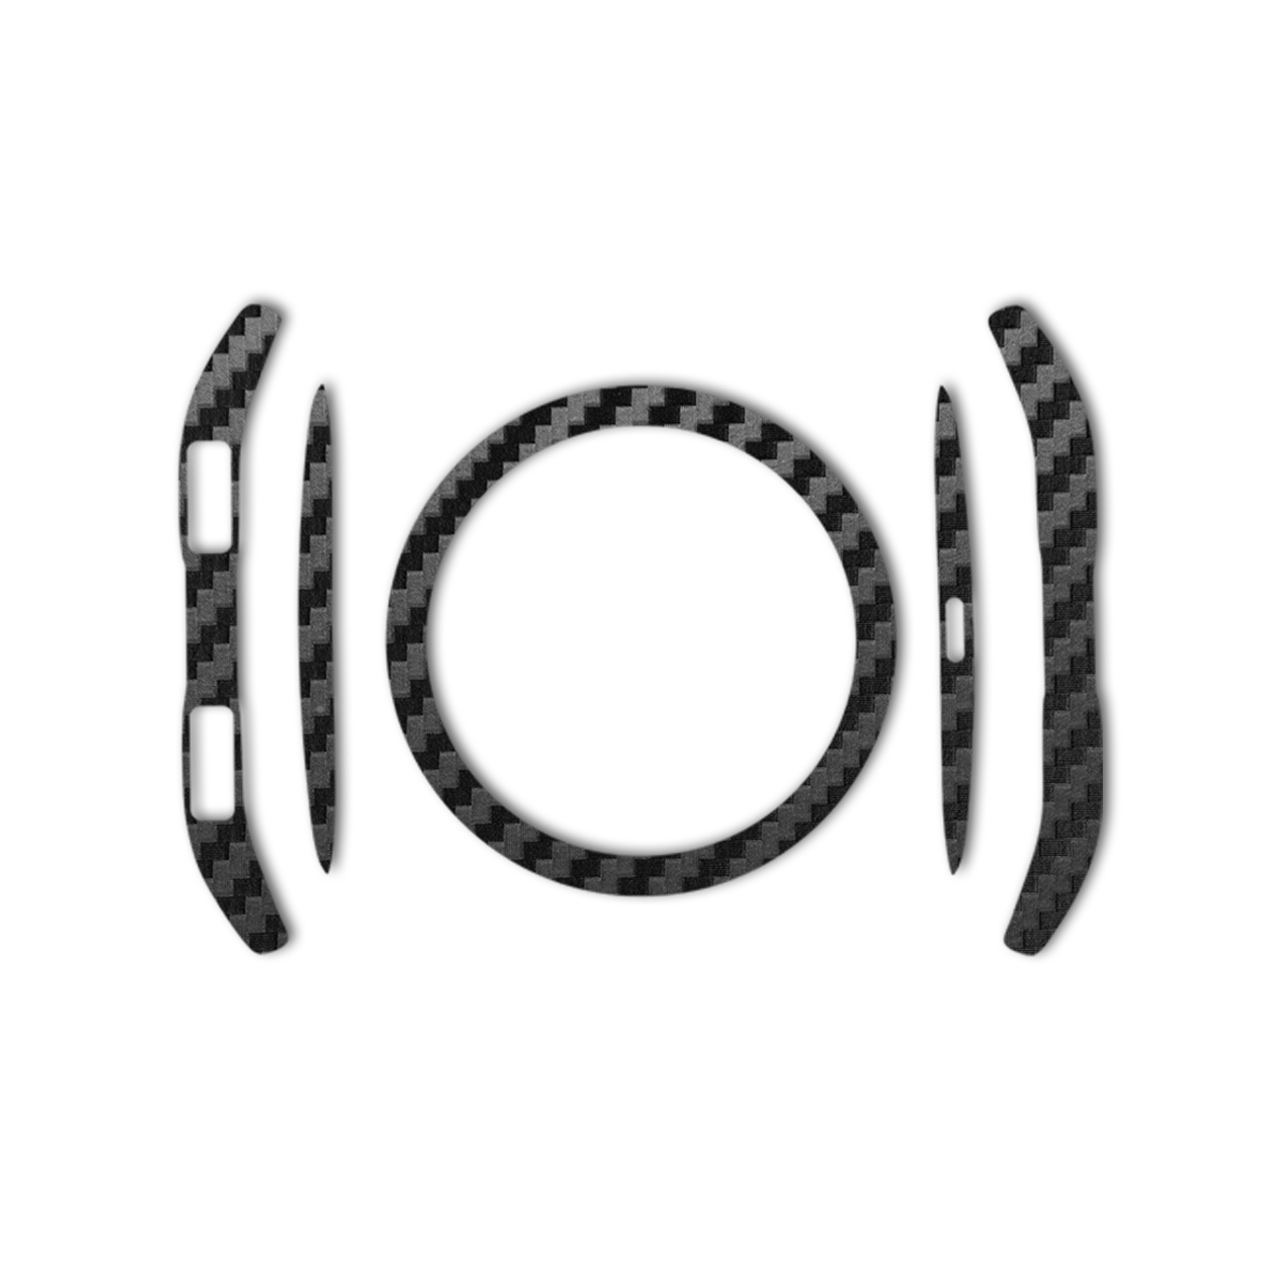 بسته 2 عددی برچسب ماهوت مدل Carbon-fiber مناسب برای ساعت هوشمند Samsung Gear S3 Frontier